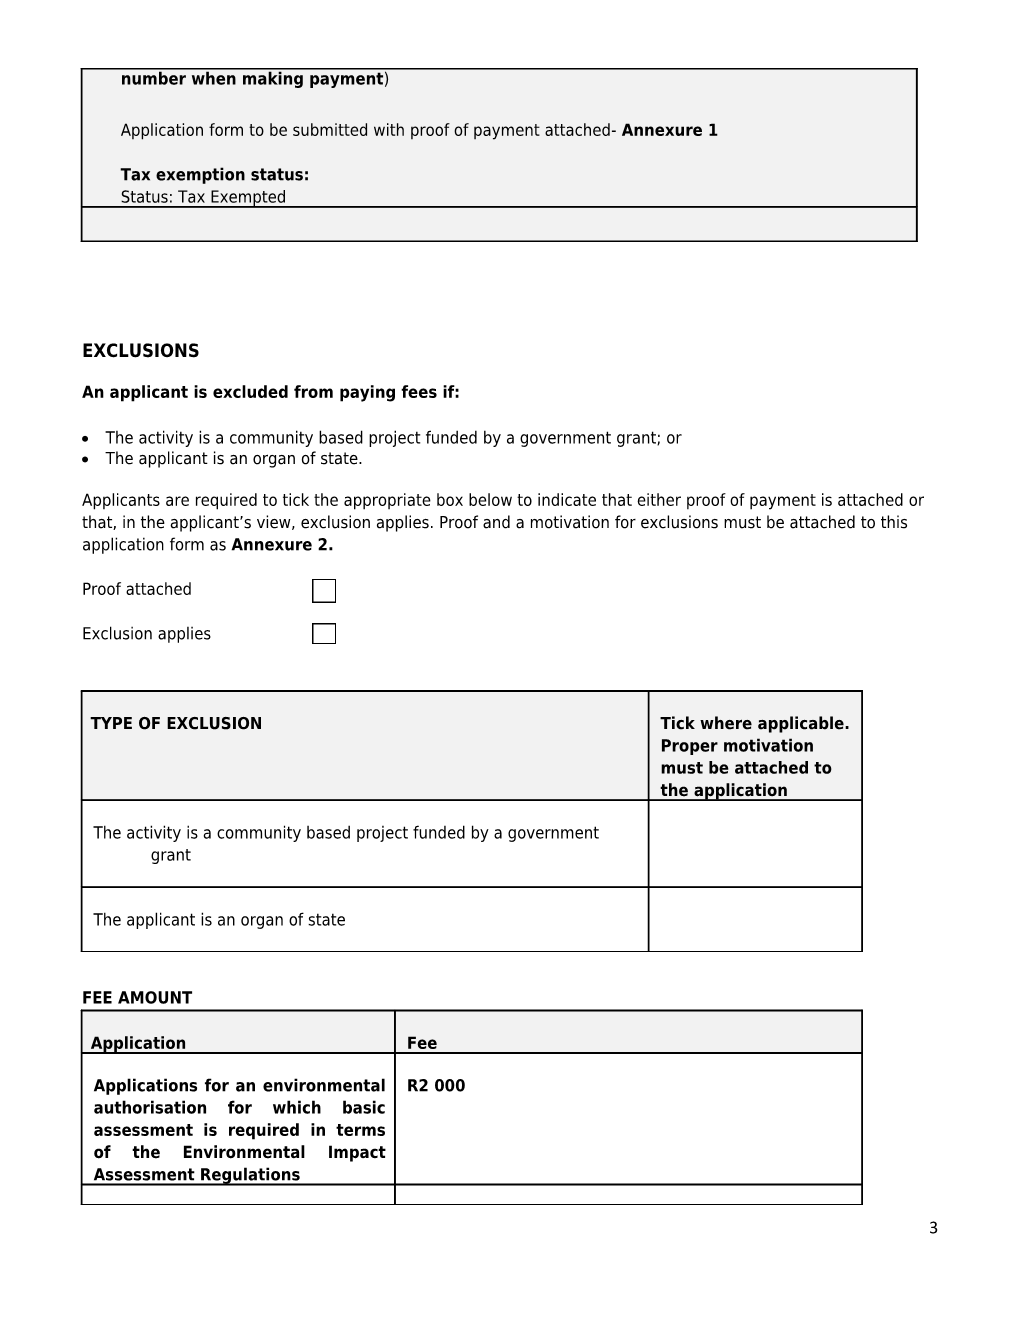 Application Form for Environmental Authorisation - 8 December 2014